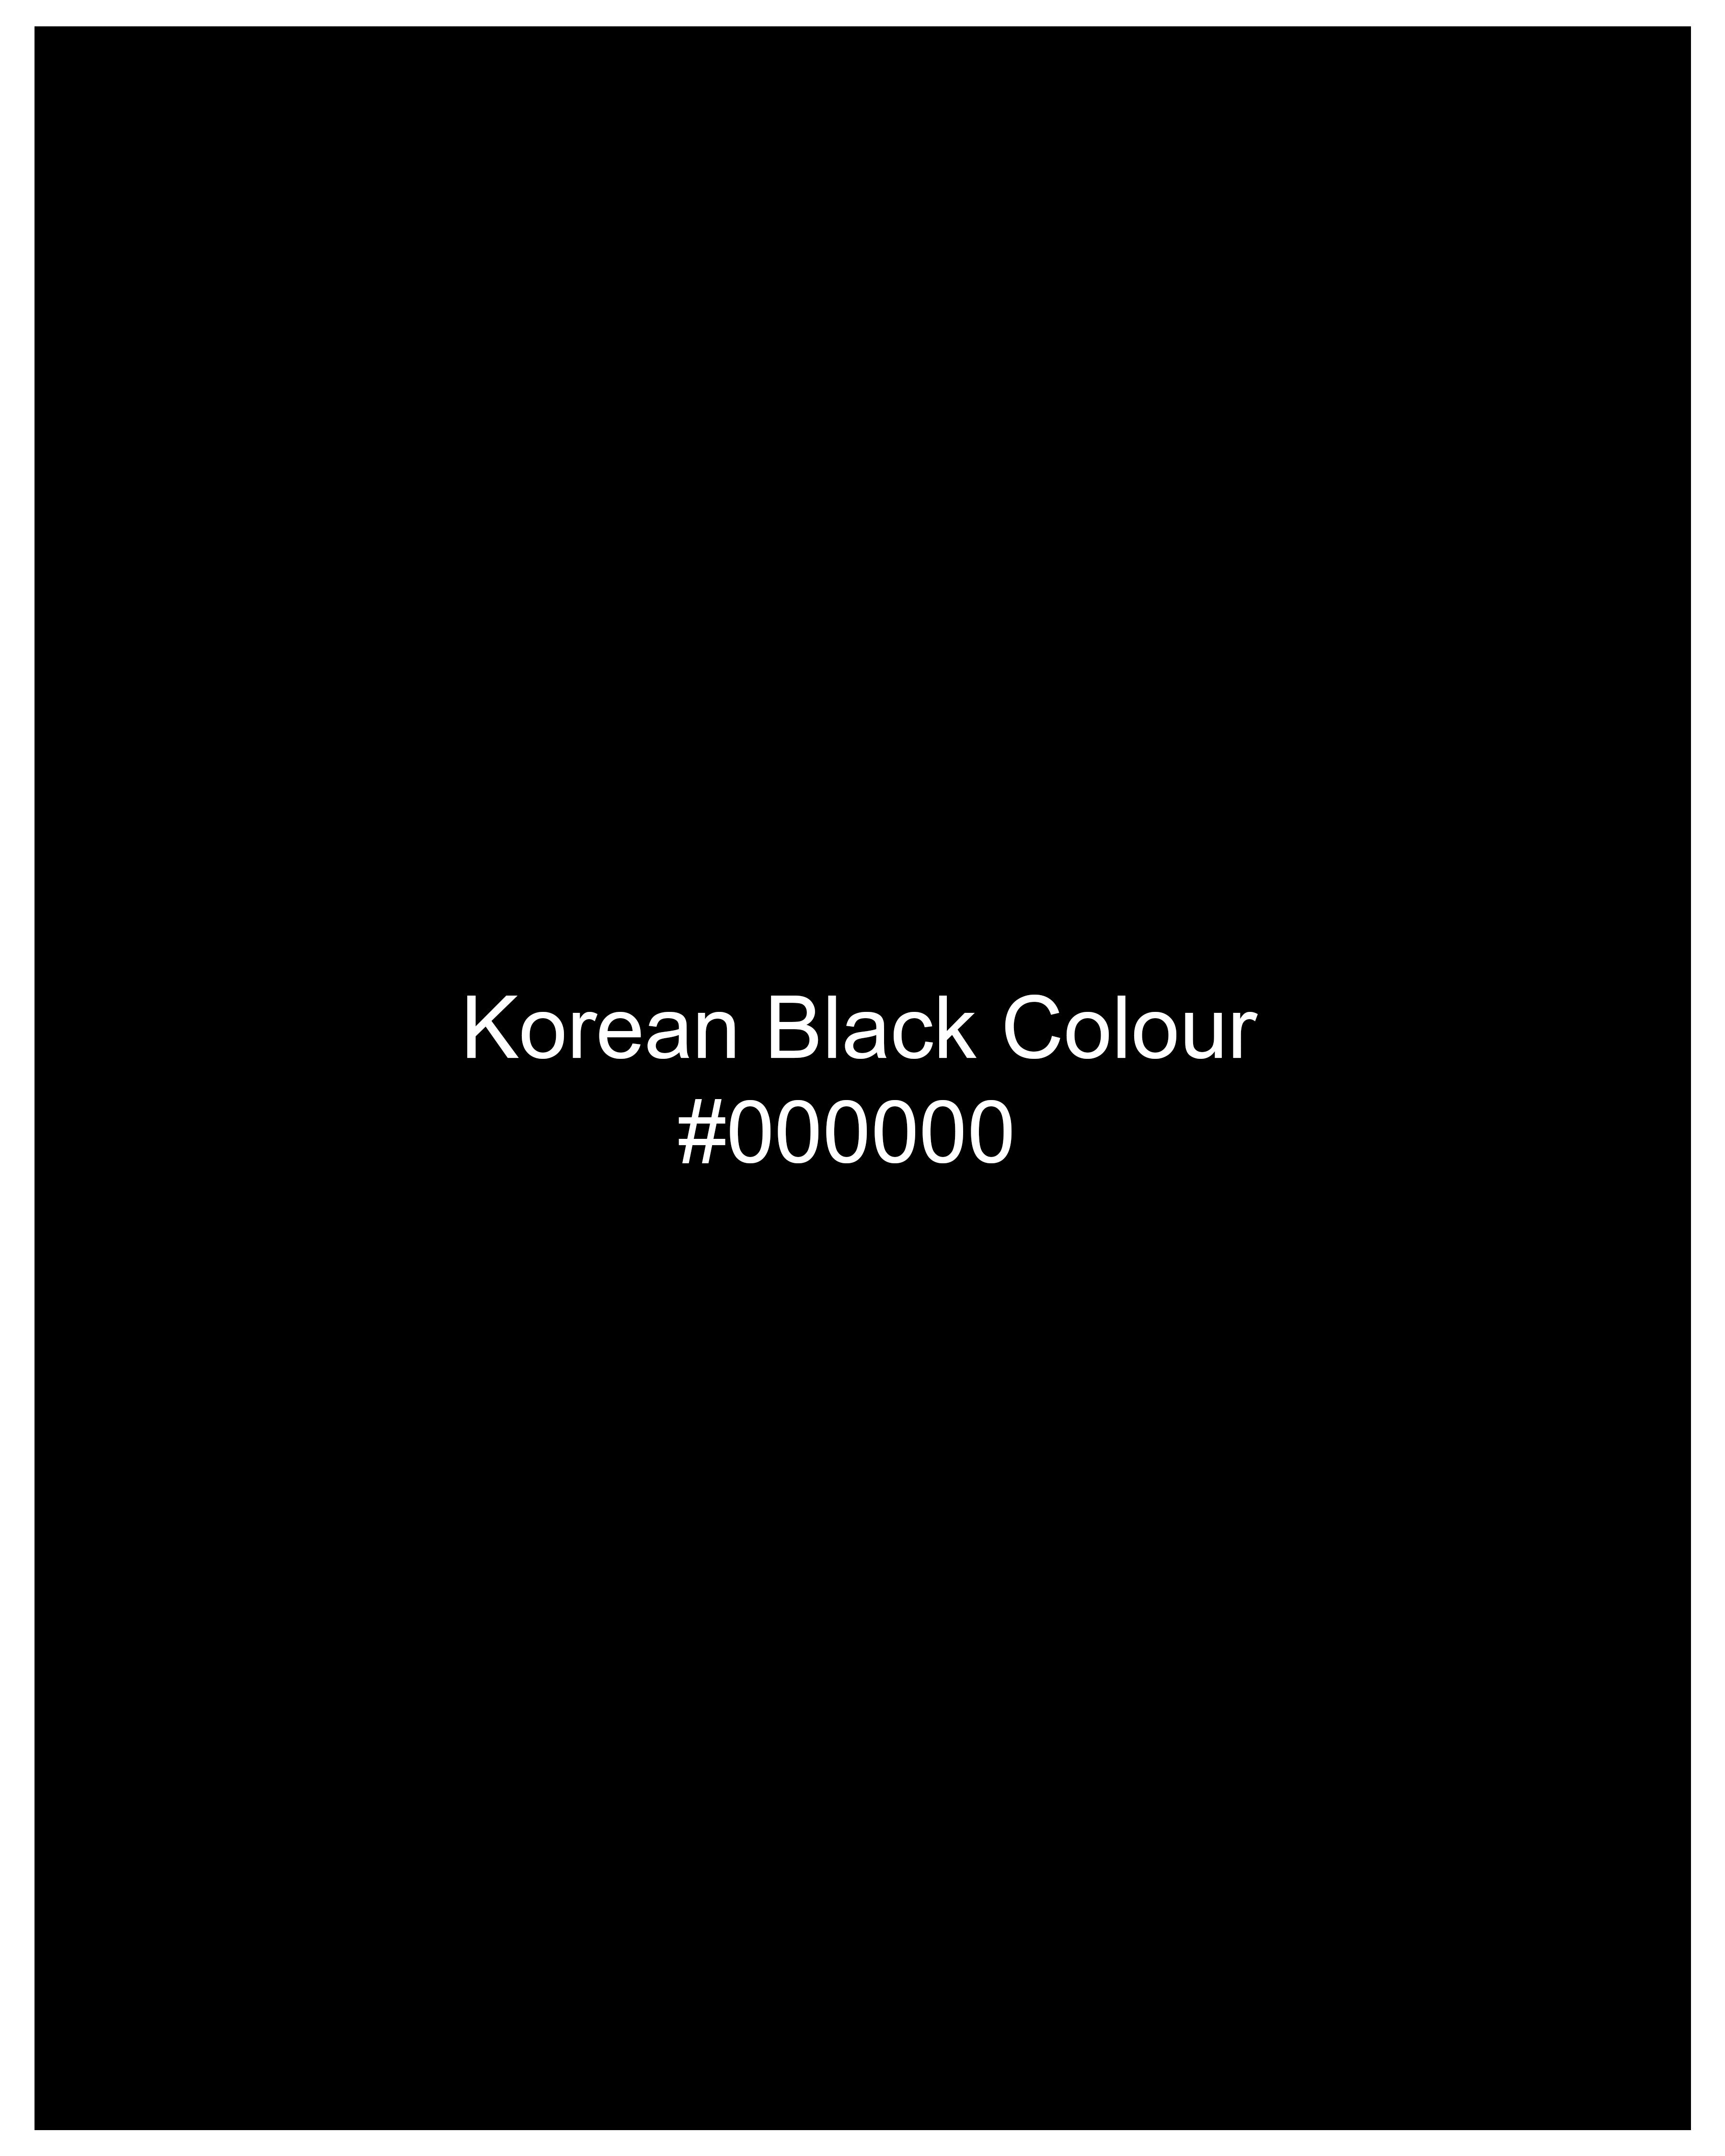 Korean Black (The Best Black We Have) Cross Placket Bandhgala Blazer